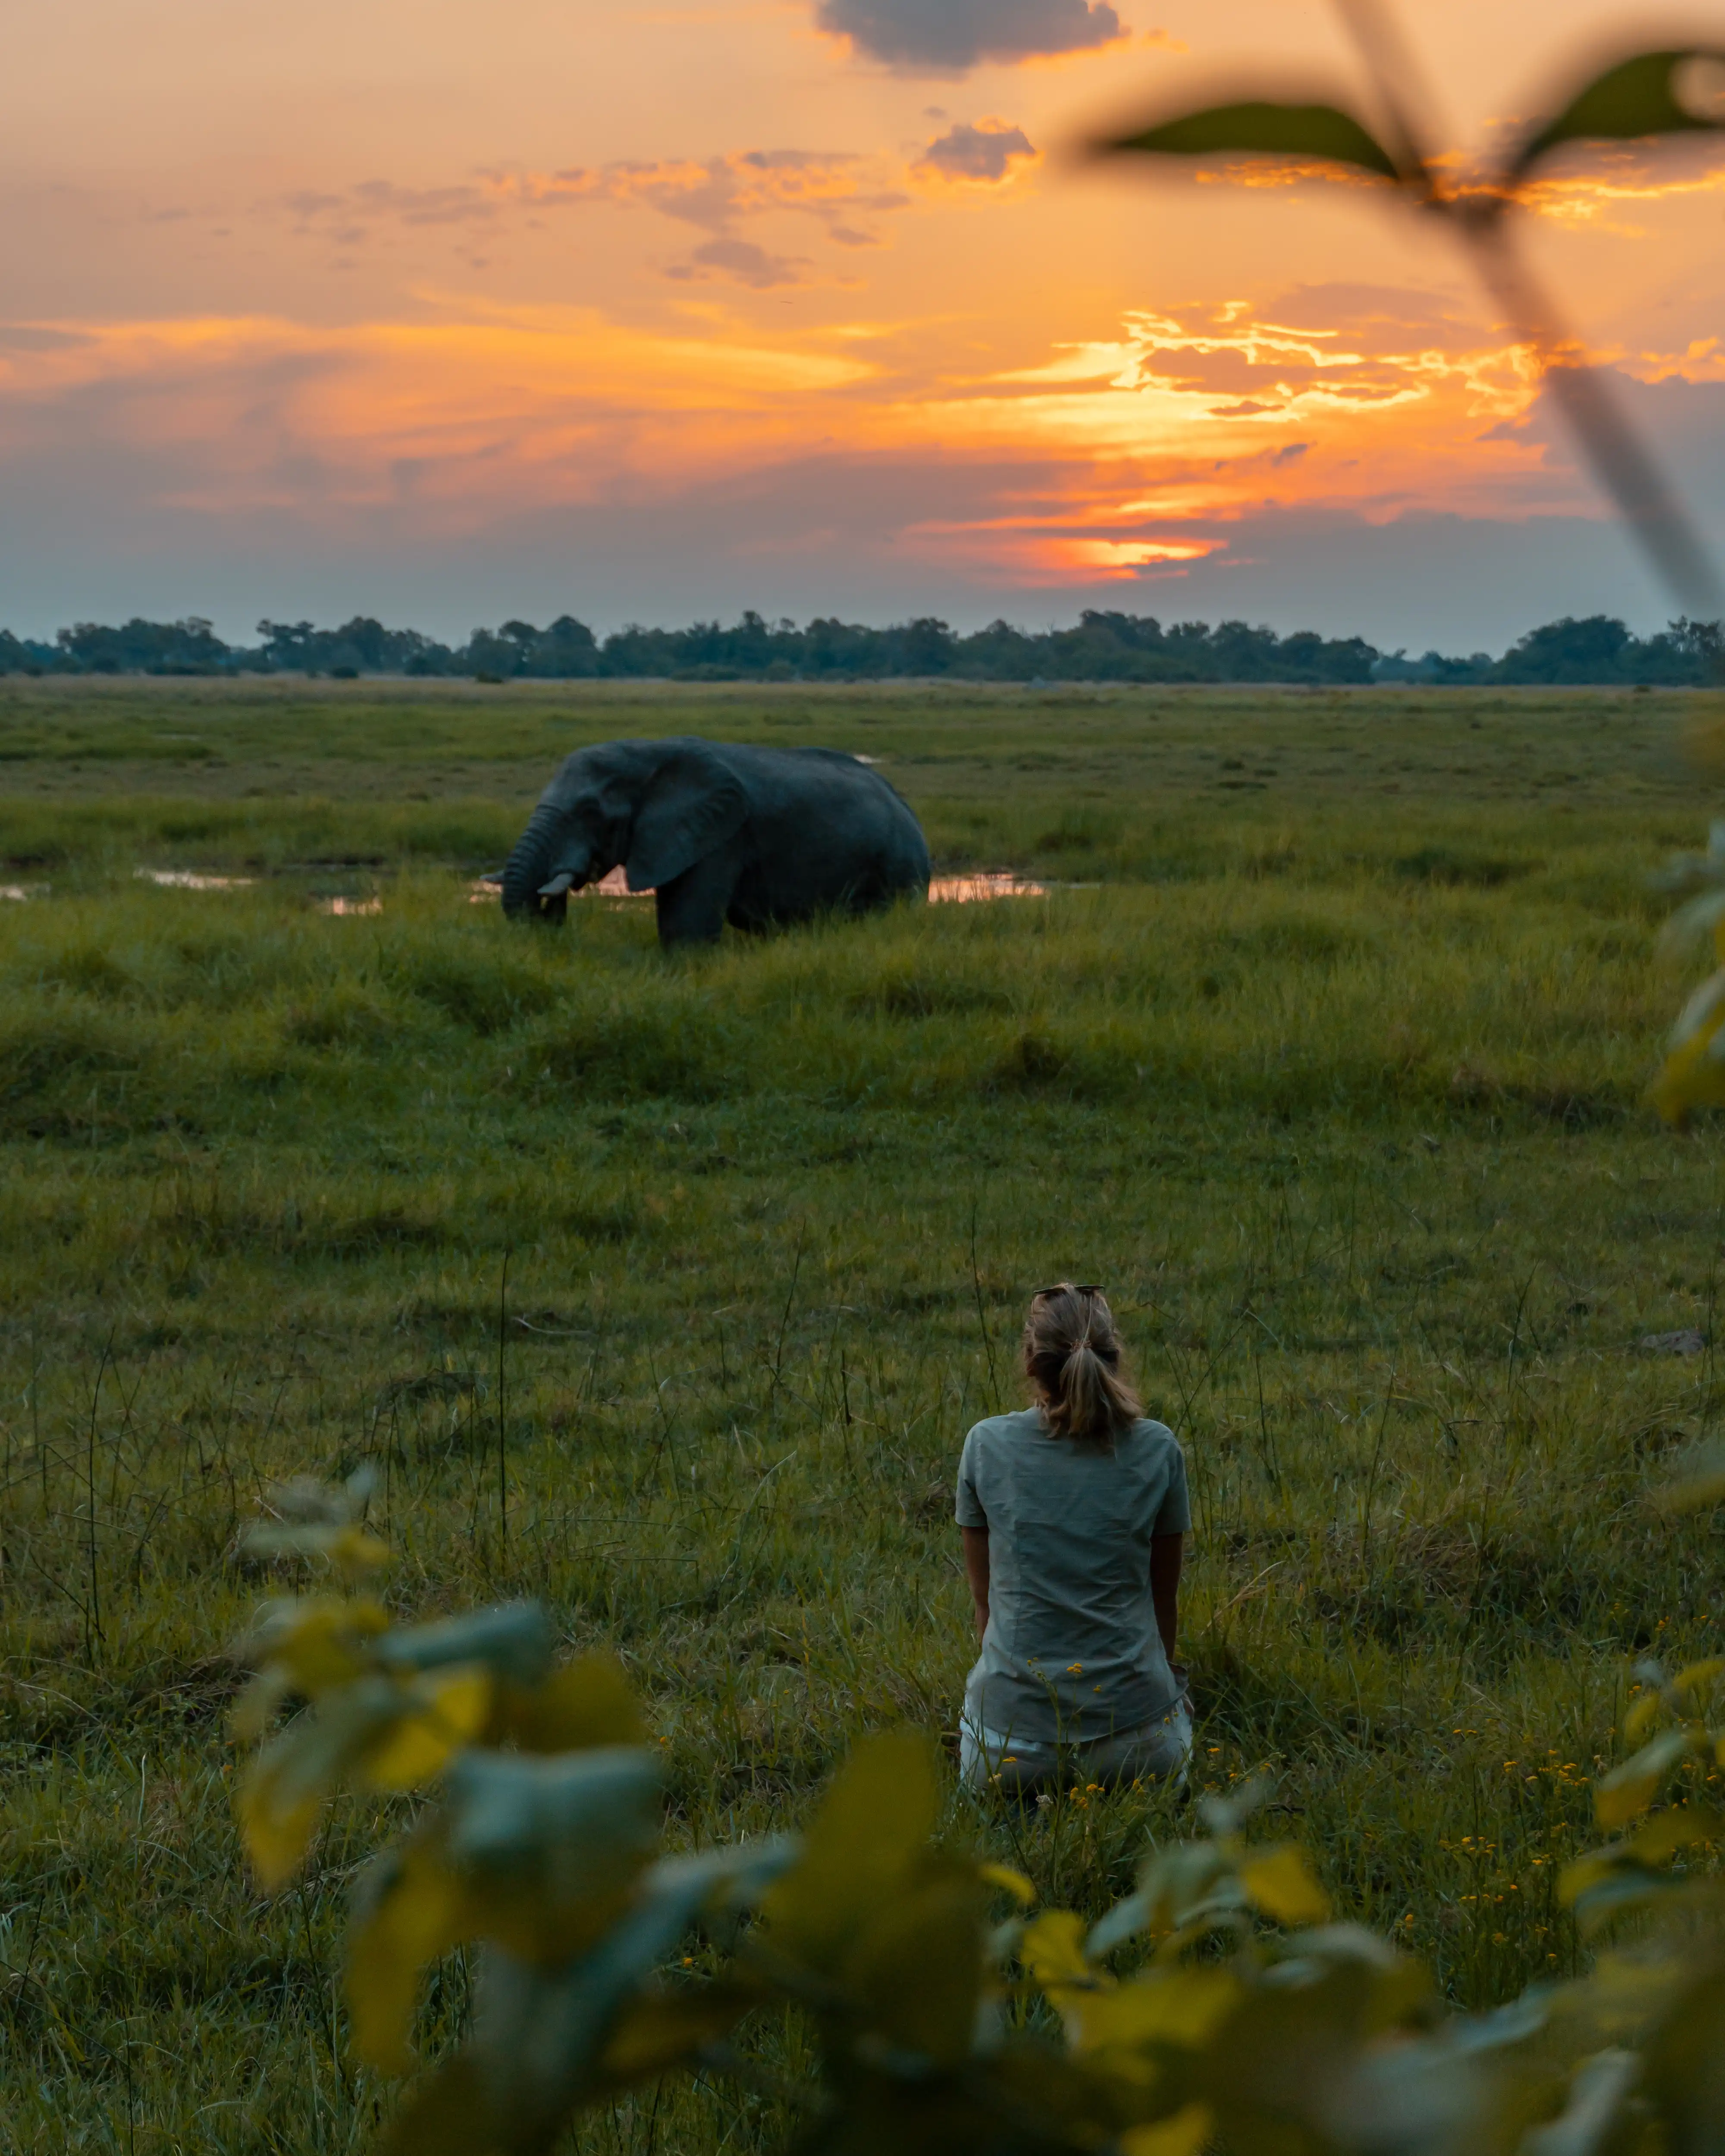 Tourist spotting an elephant in an African Safari